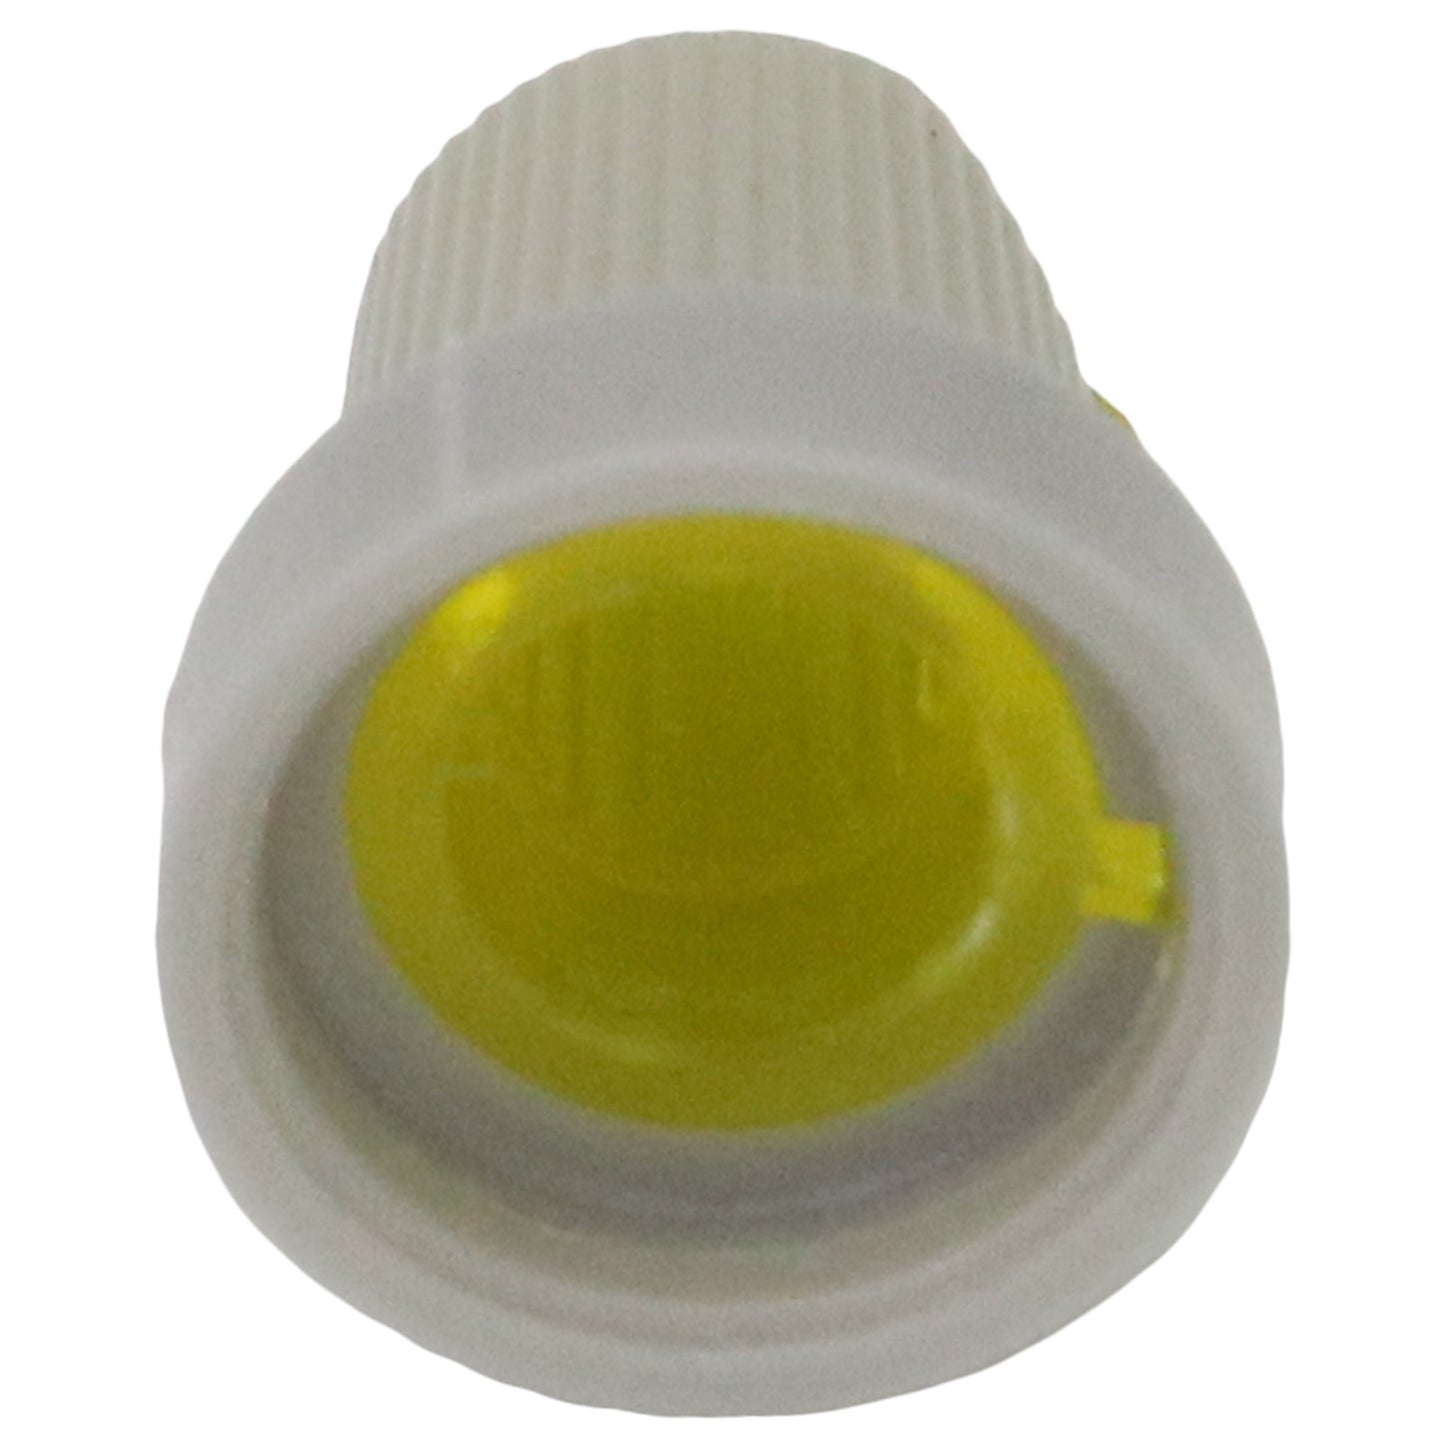 AG5 Illuminateable Grey Body Plastic Colour Indicator Control Knob